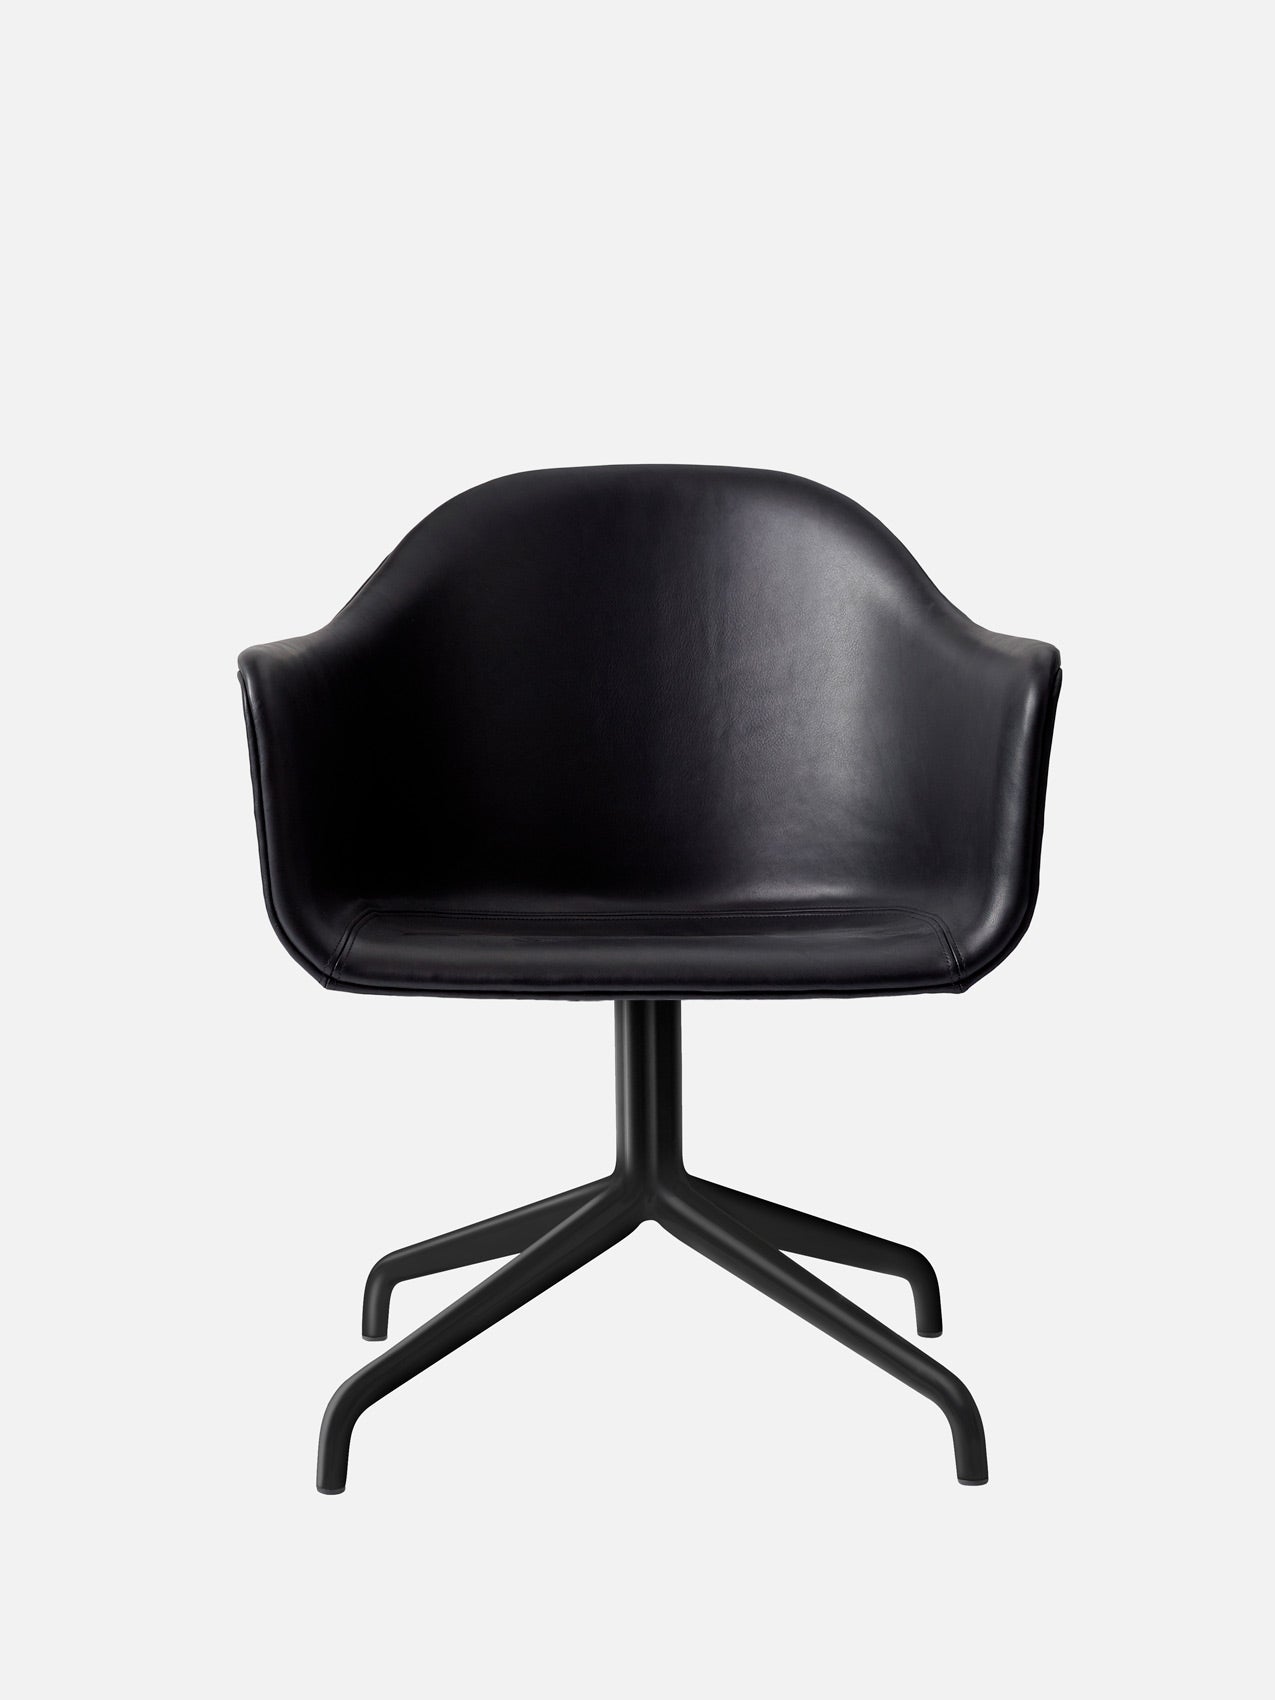 Harbour Arm Chair, Upholstered-Chair-Norm Architects-Star Base (Seat 17.7in H)/Black Steel-0842 Black/Dakar-menu-minimalist-modern-danish-design-home-decor